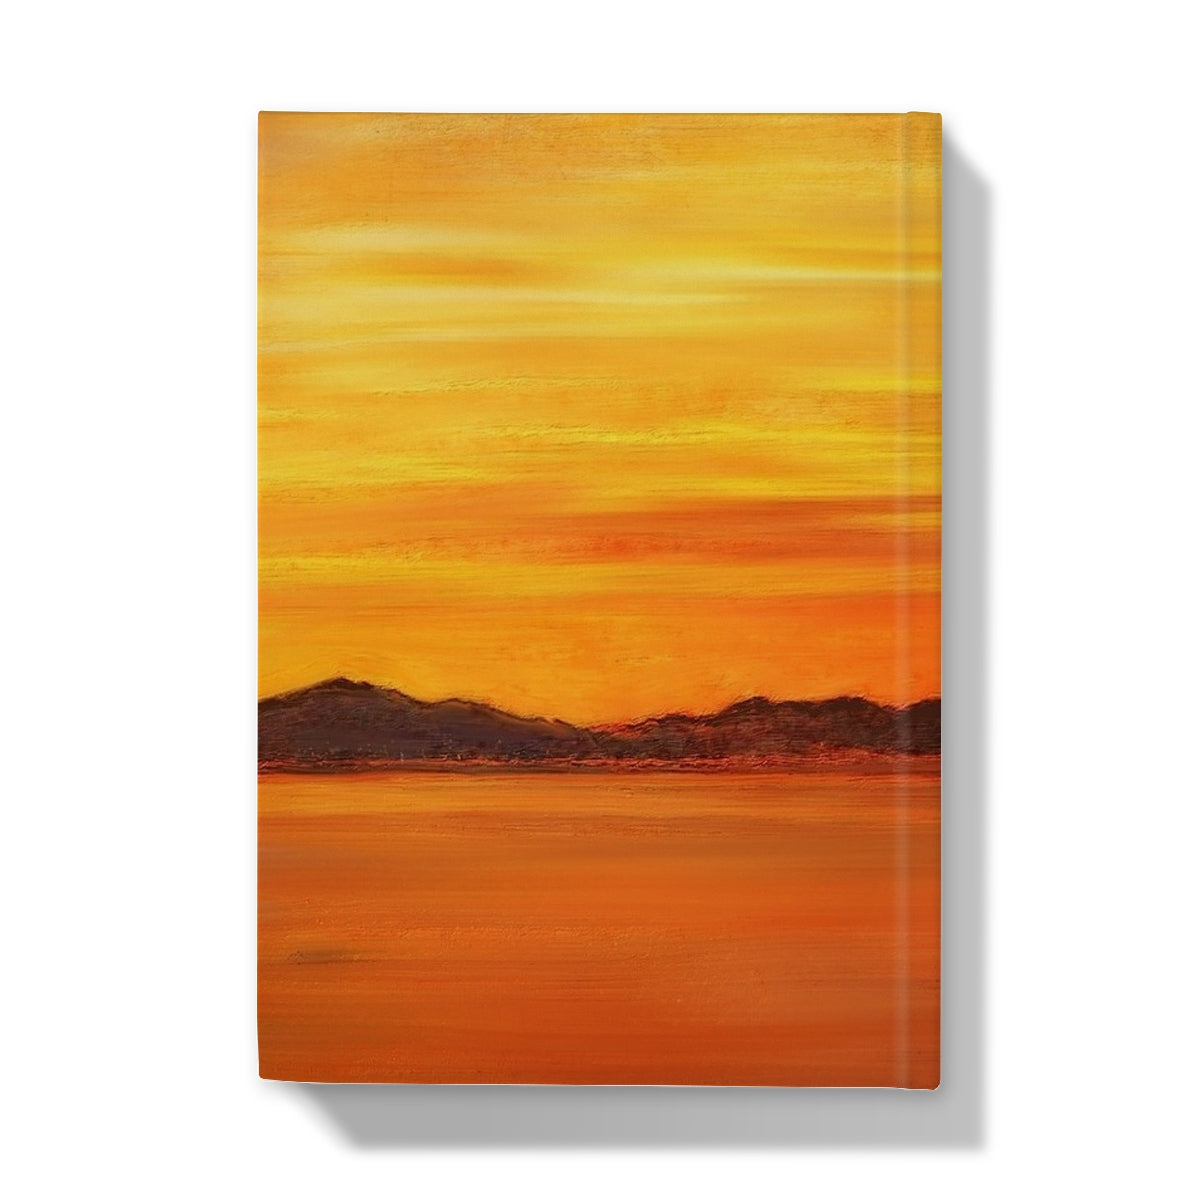 Loch Fyne Sunset Art Gifts Hardback Journal